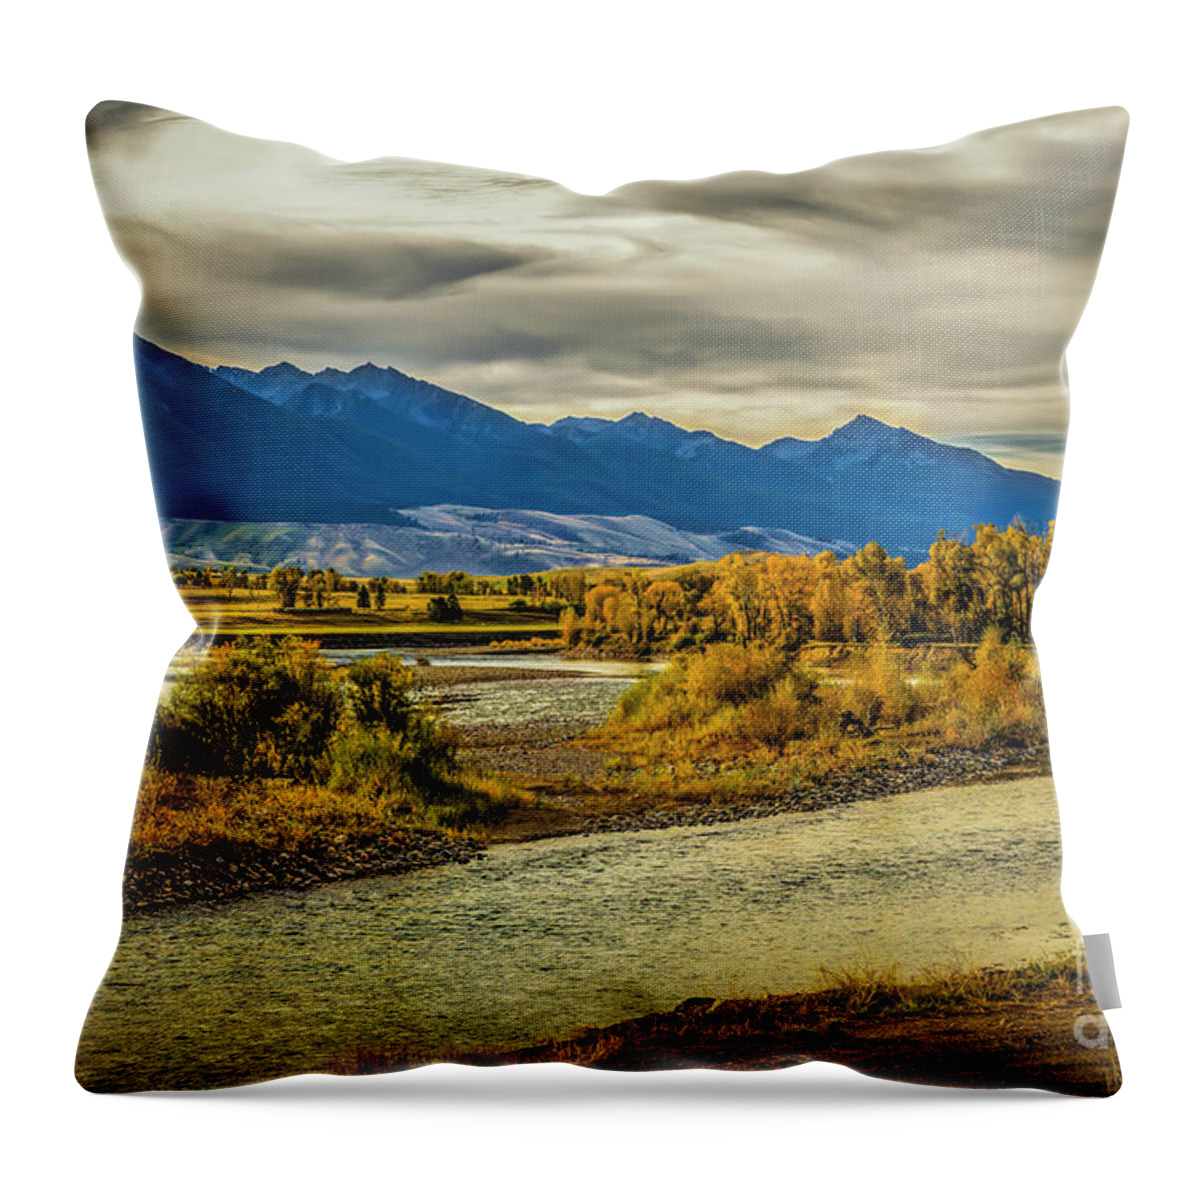 Jon Burch Throw Pillow featuring the photograph Yellowstone Morning by Jon Burch Photography